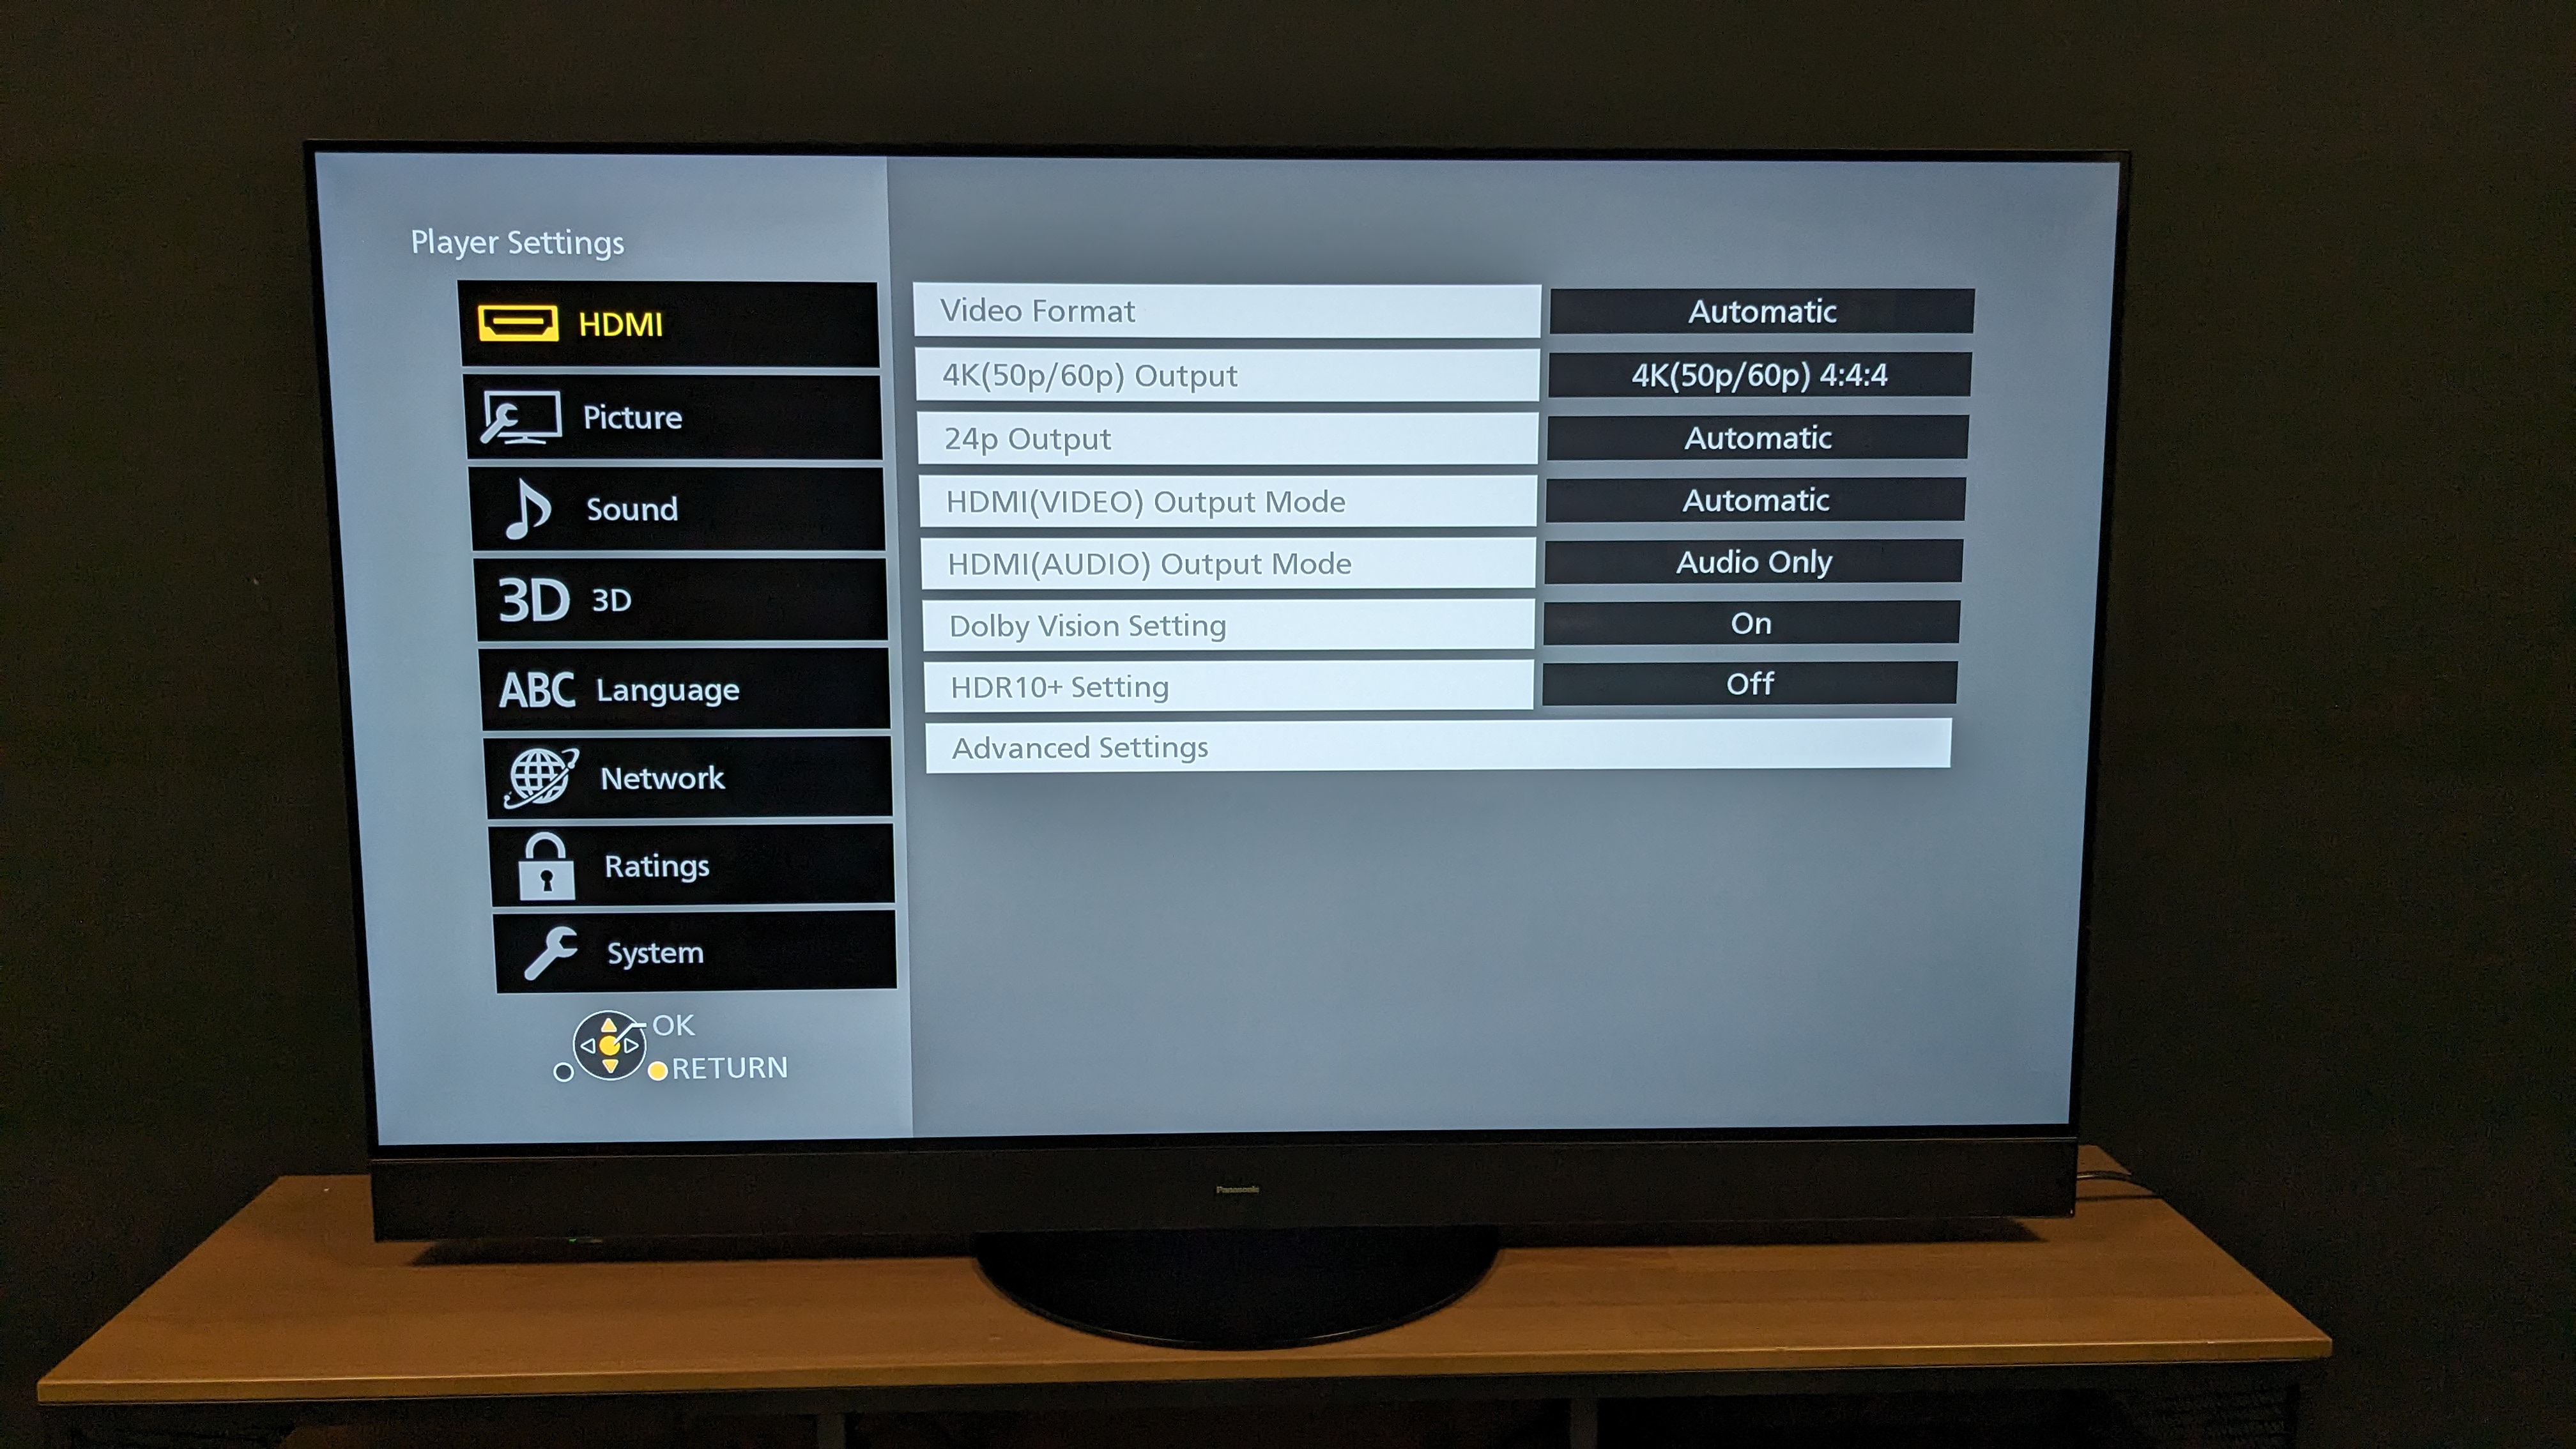 Panasonic DP-UB820 picture settings menu on Panasonic MZ1500